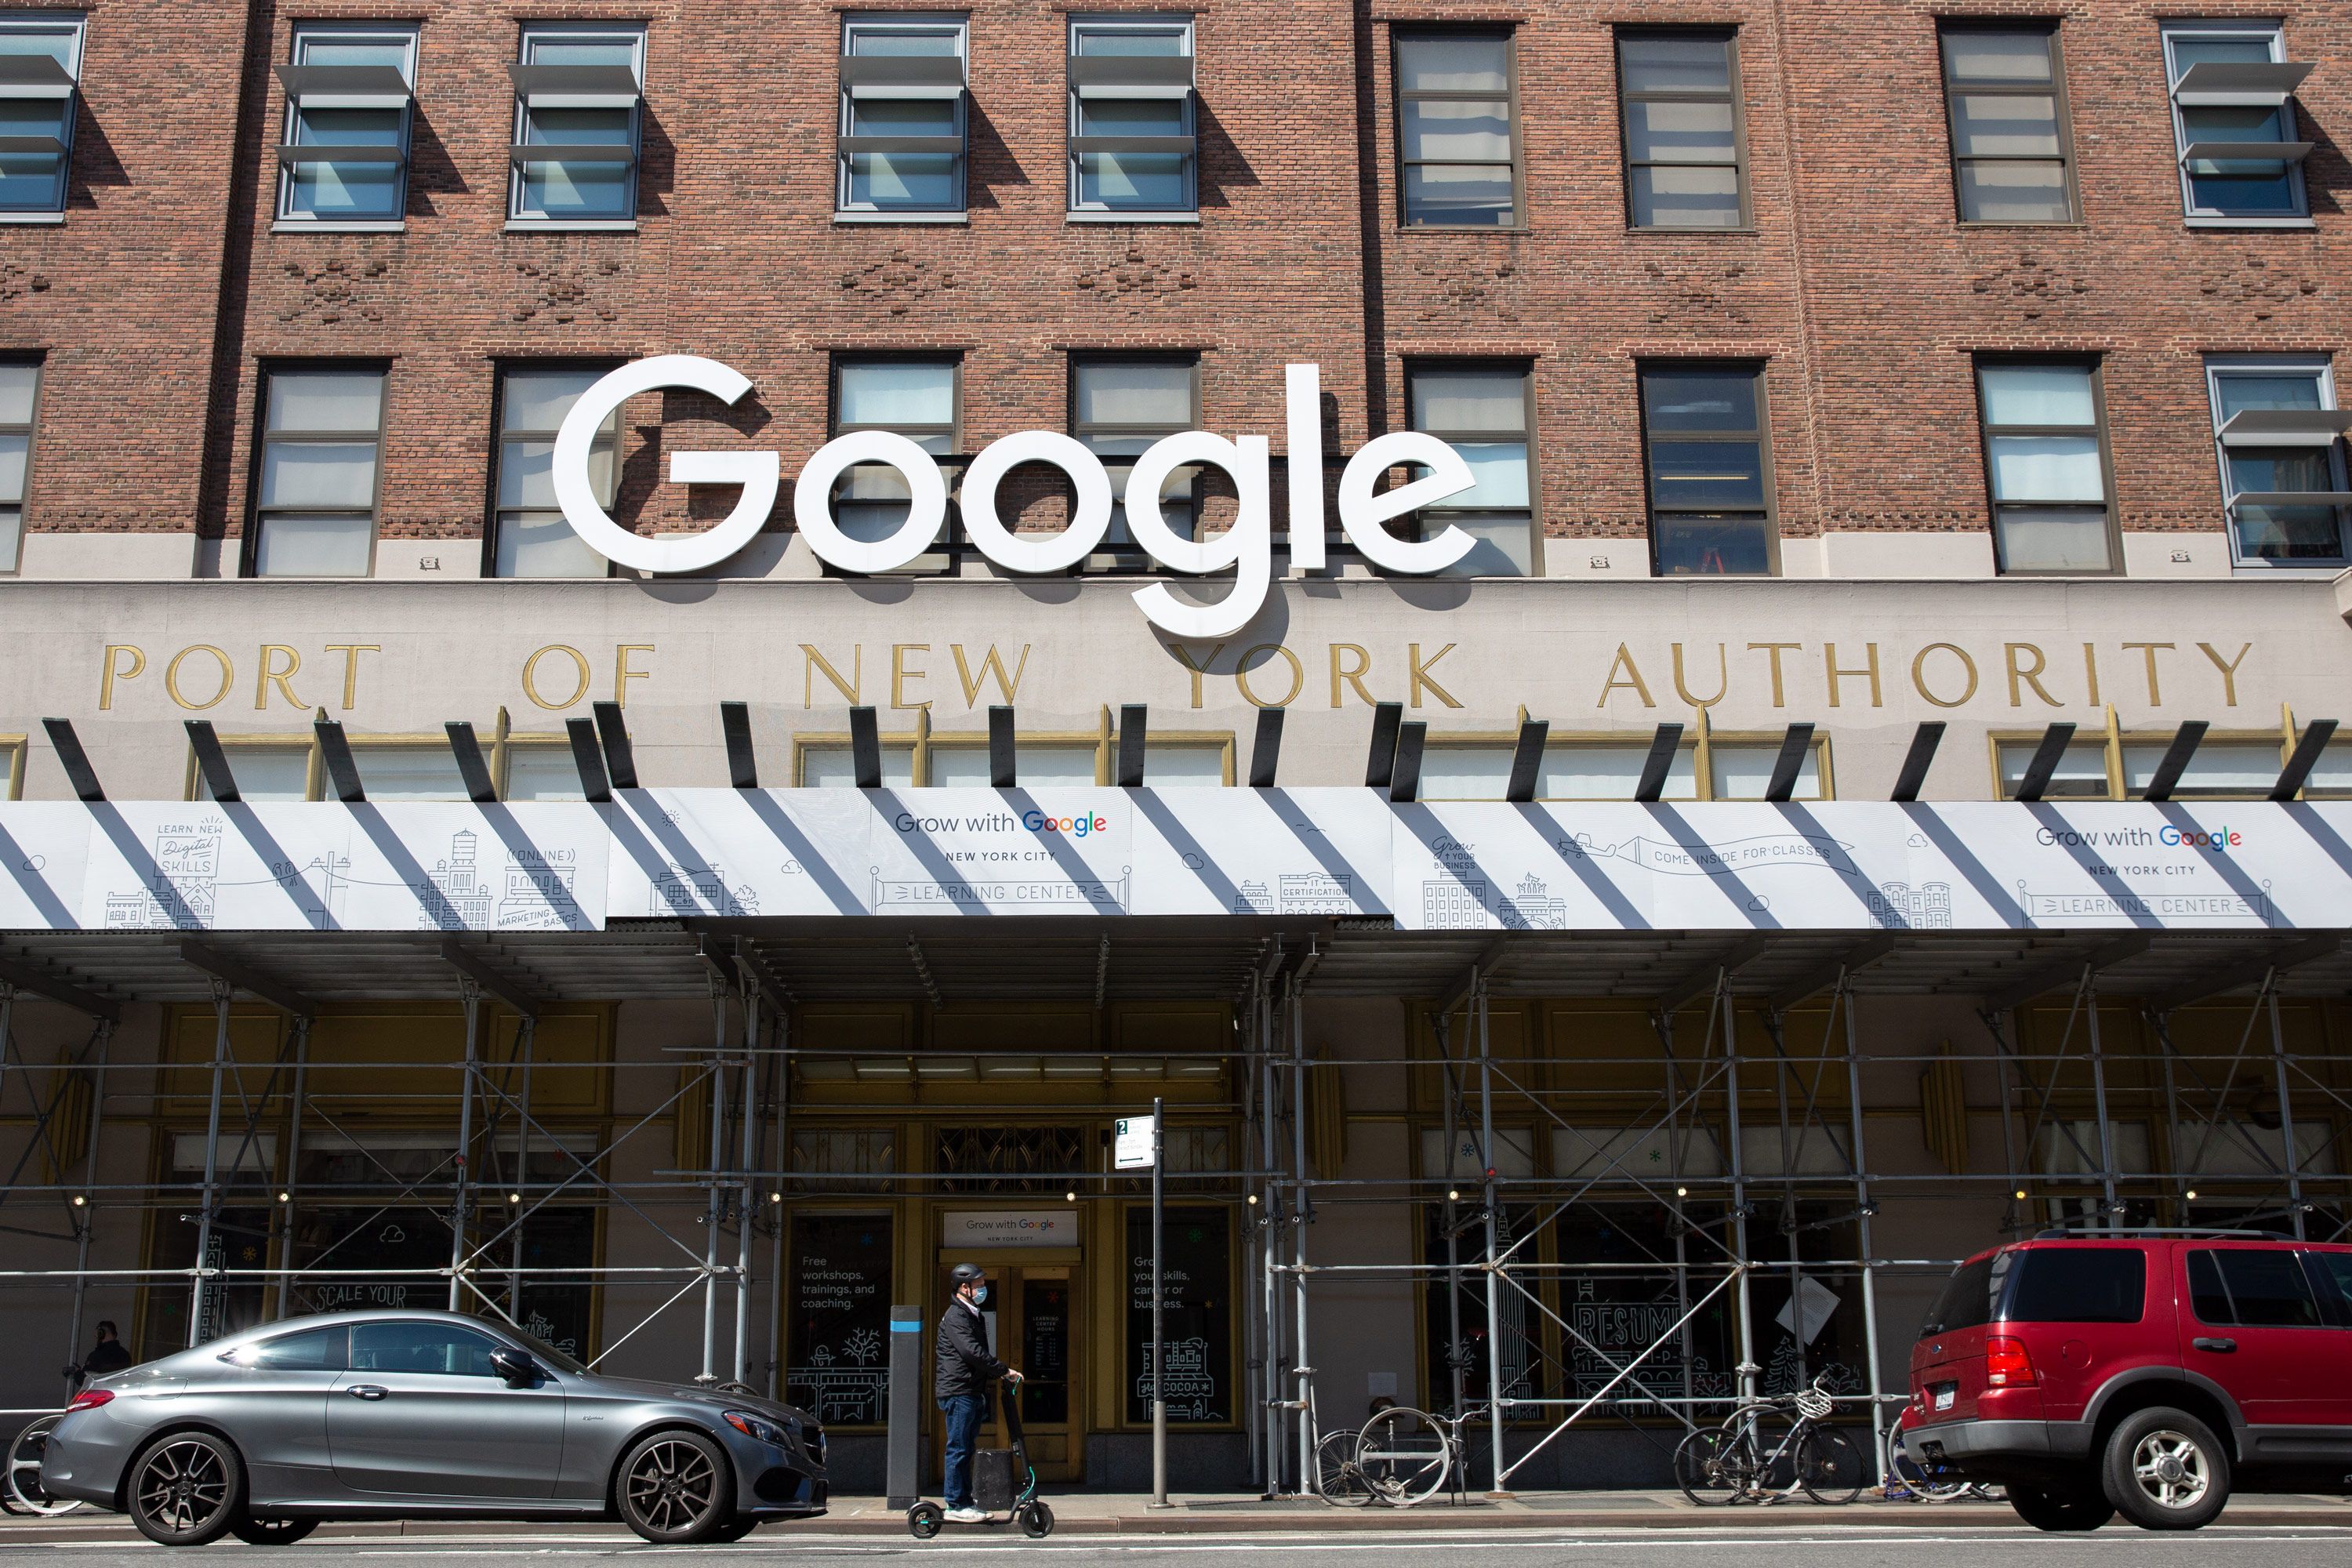 Google’s New York headquarters on Eight Avenue in Chelsea.